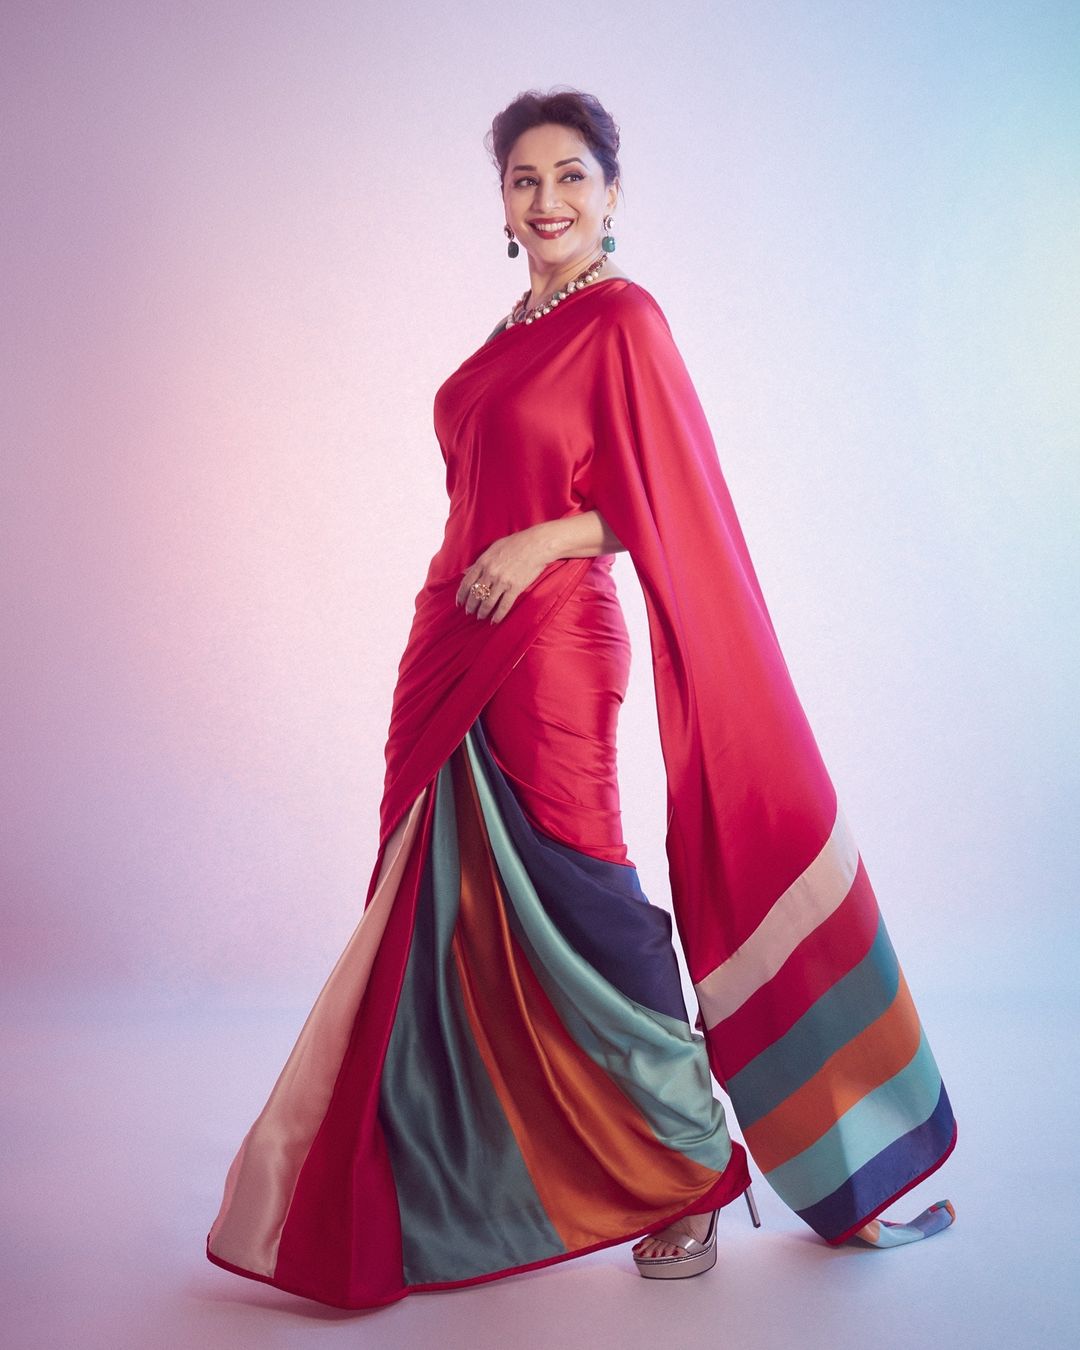 Madhuri Dixit looks astounding in the red silk saree.